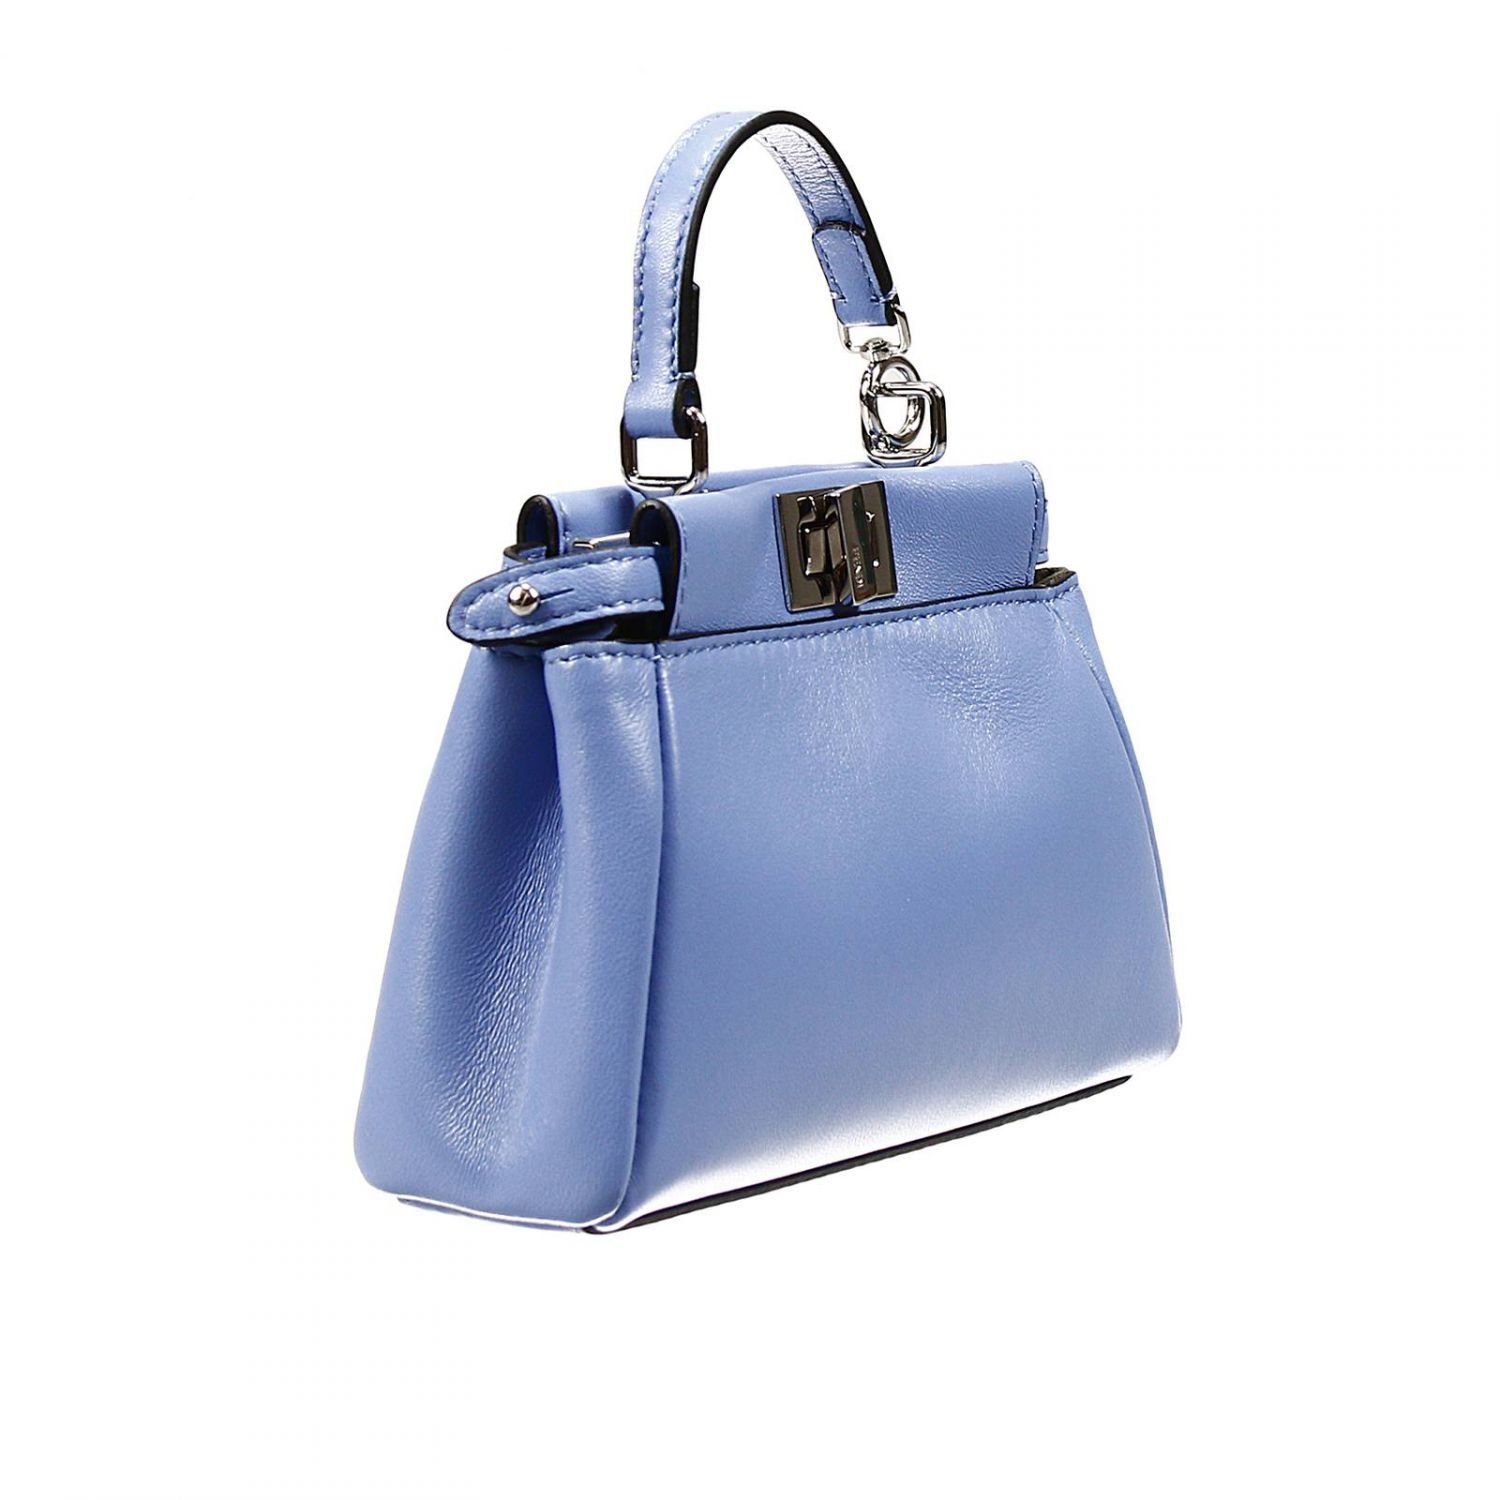 Lyst - Fendi Handbag Leather With Shoulder Micro Peekaboo Bag in Blue